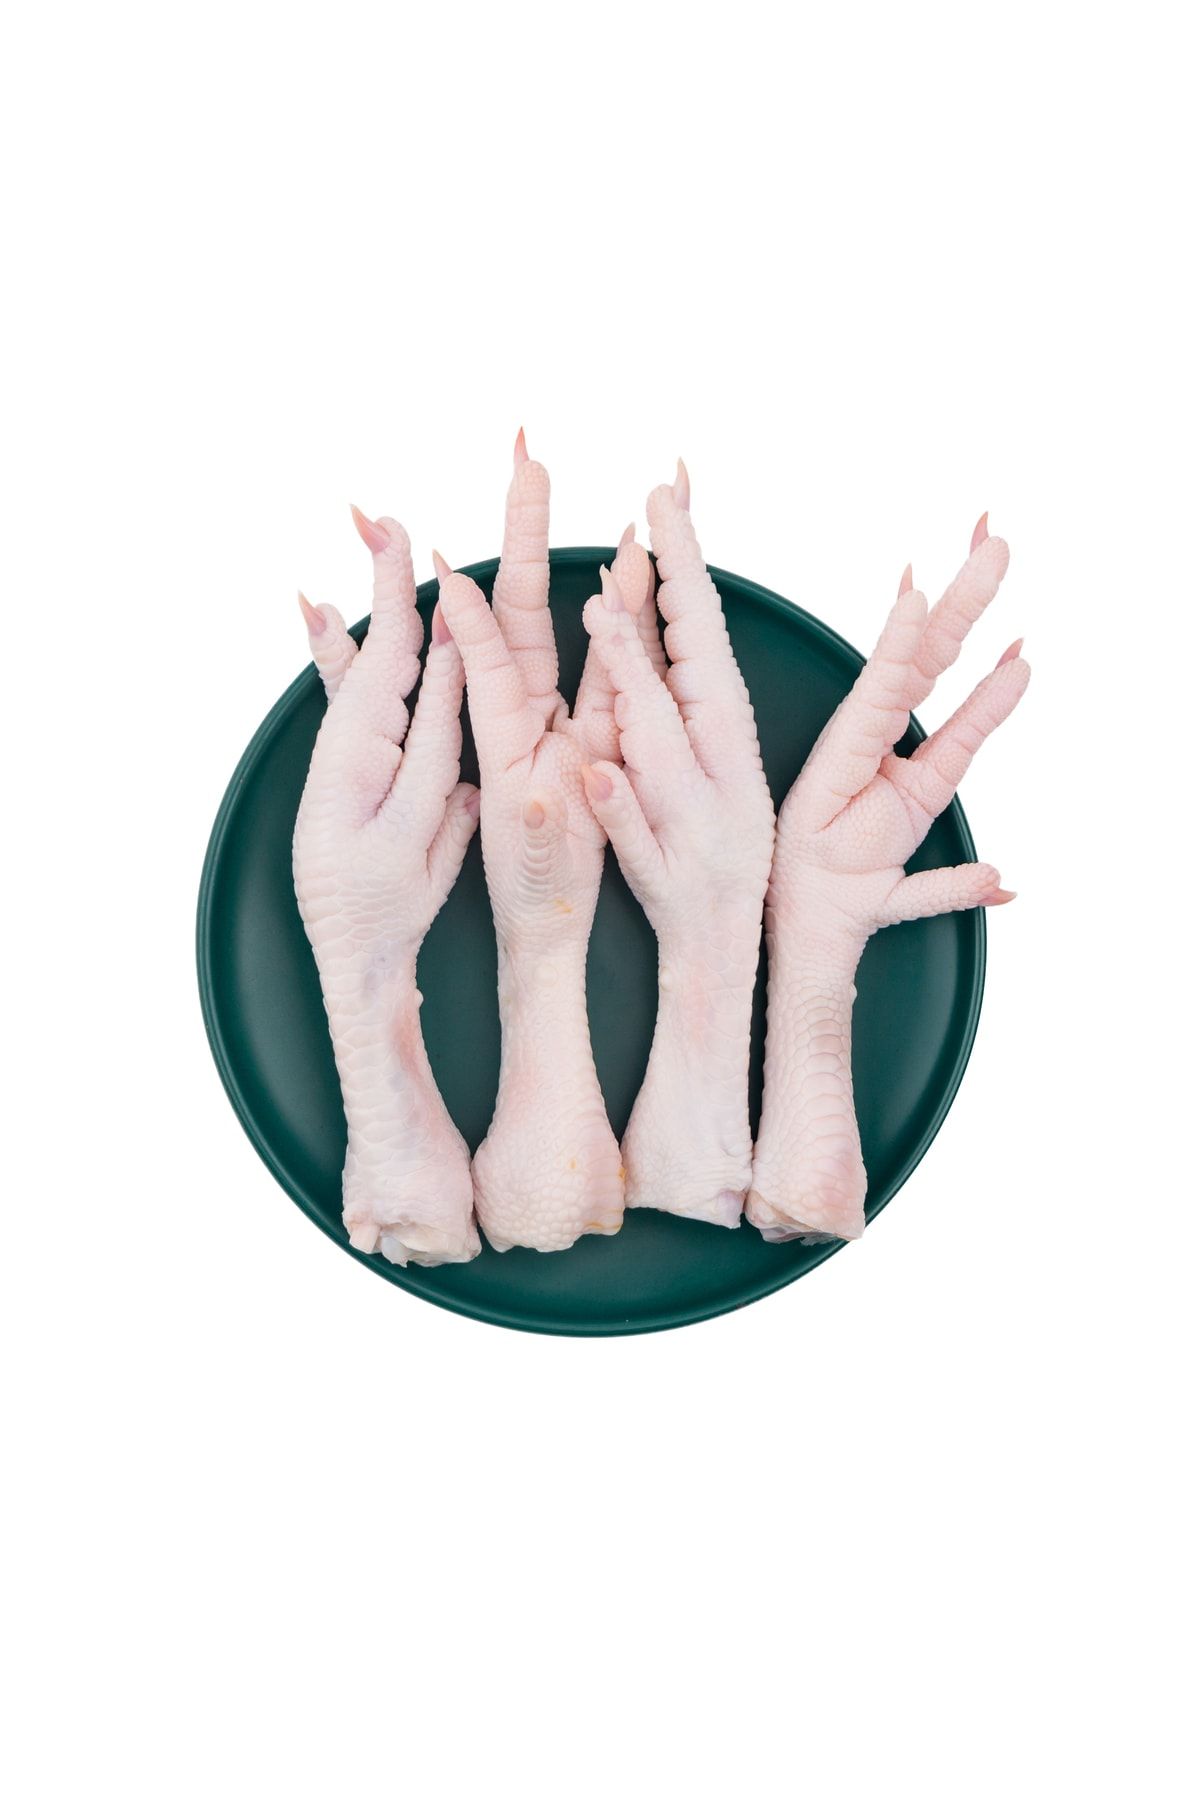 XUSHI GIDA Tavuk Ayağı ( Chicken Feet) - 1000g